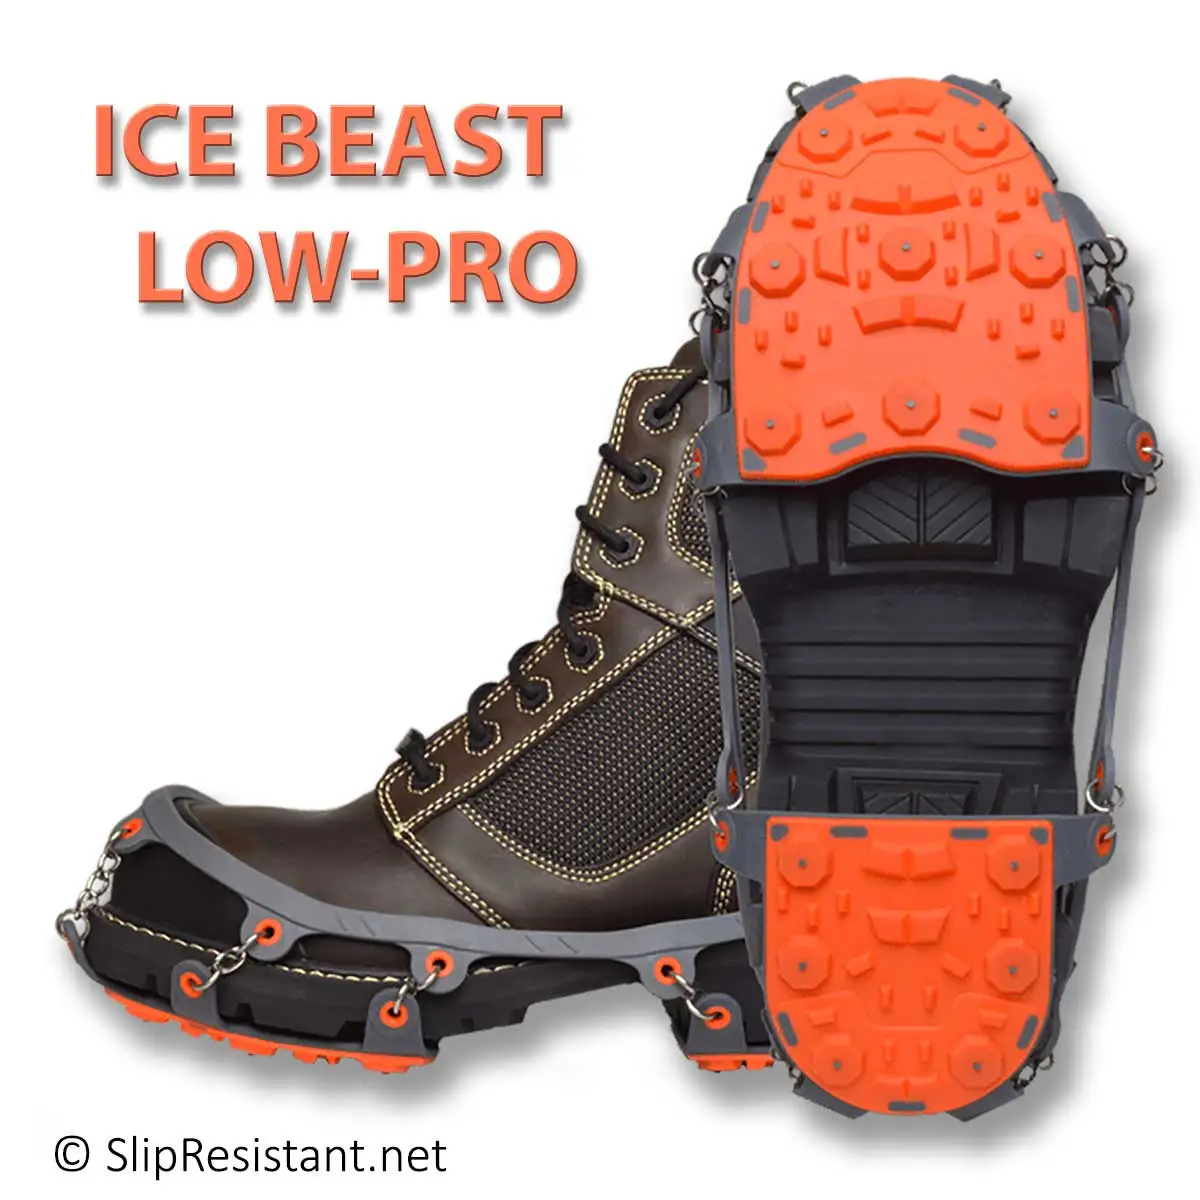 ICE BEAST LOW-PRO Ice Cleats